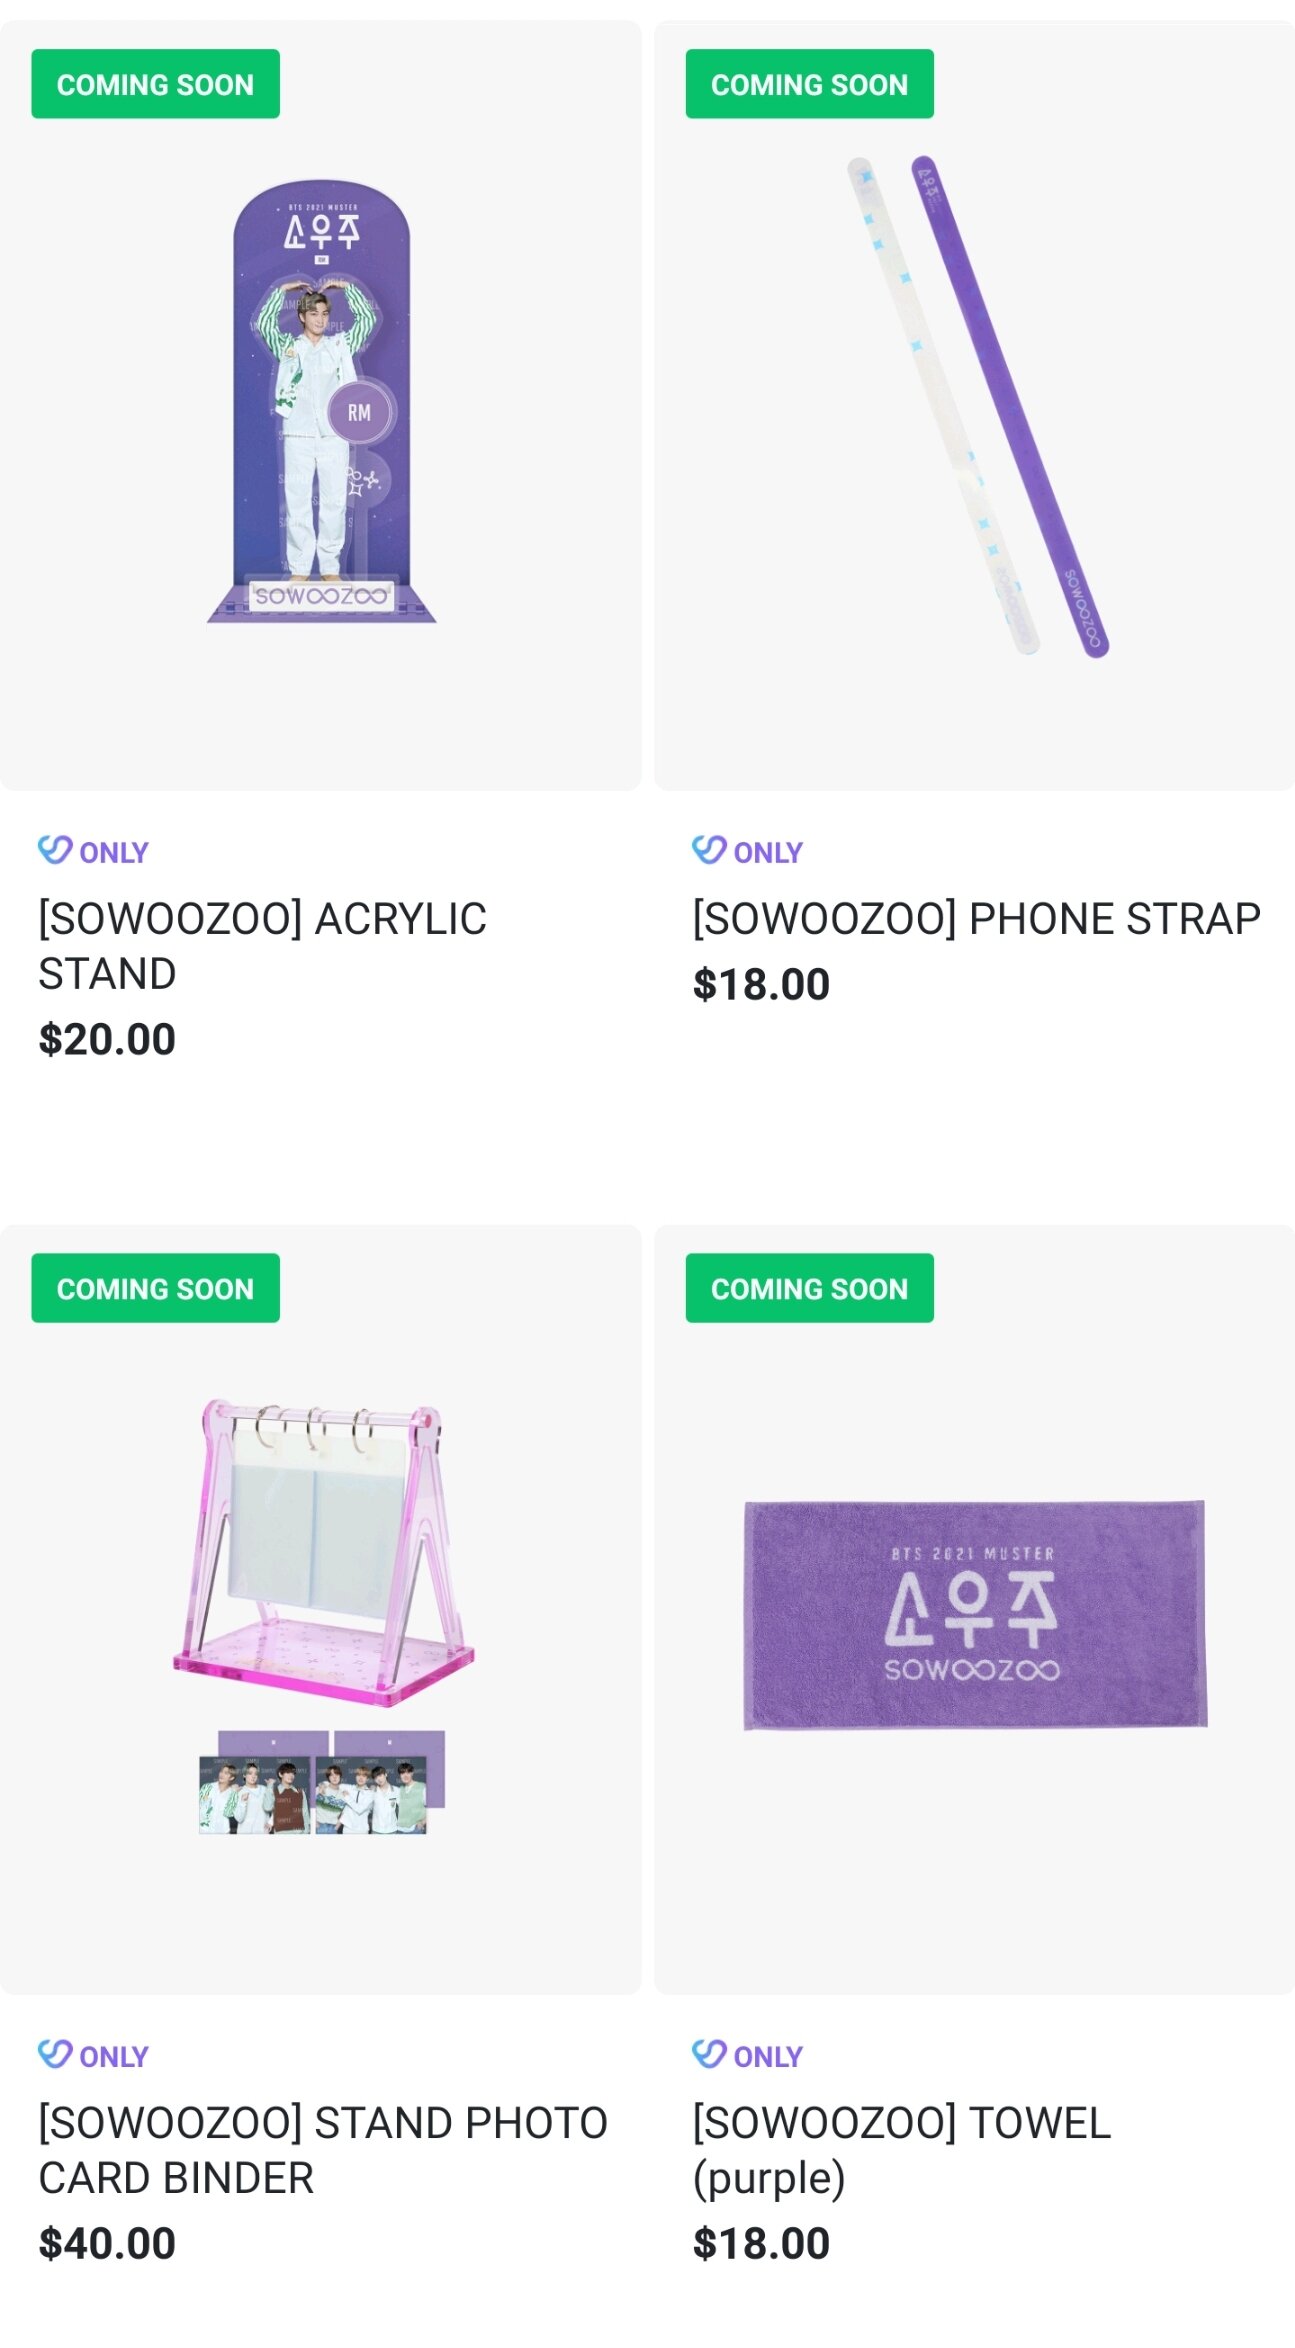 SOWOOZOO acrylic stand, phone strap, standing photo card binder, purple towel